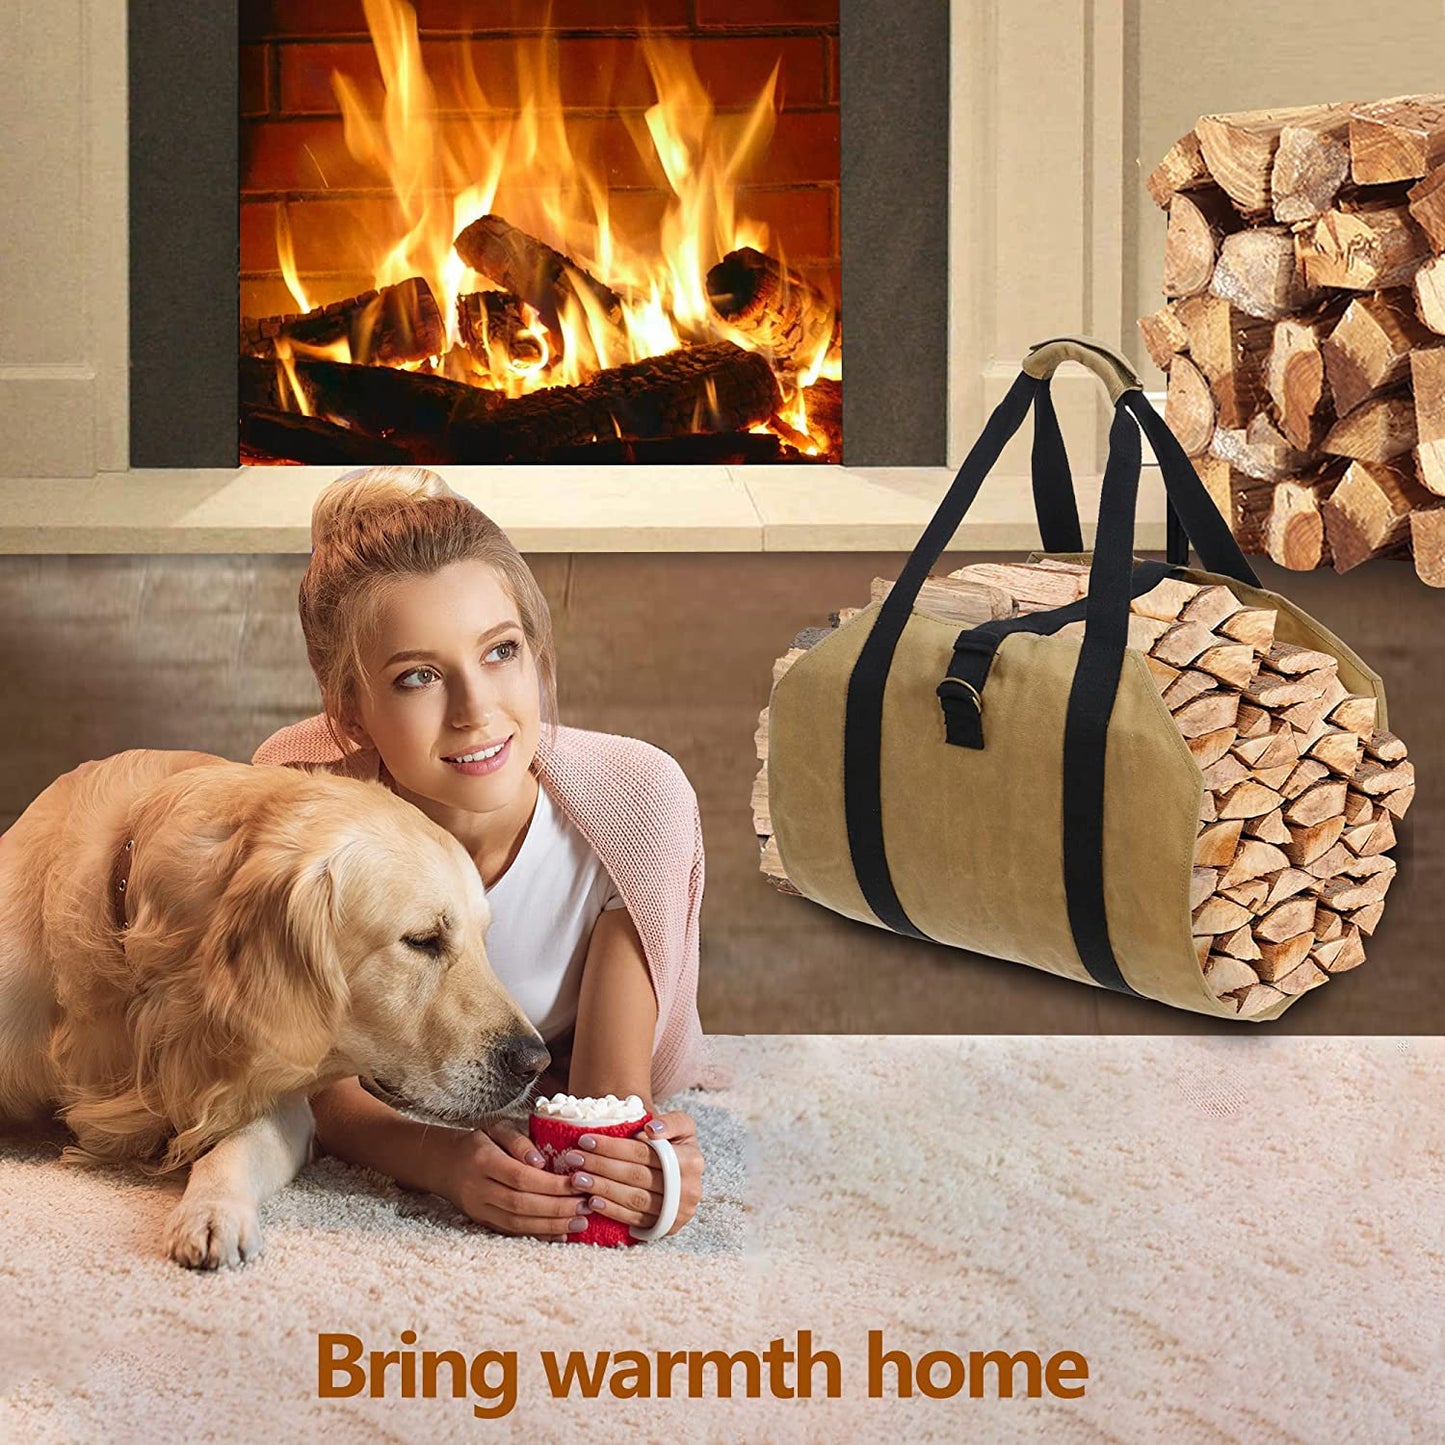 Log Carrier Bag Firewood Holder with Handles Indoor Outdoor Fireplace Wood Bag Canvas Firewood Tote Bag